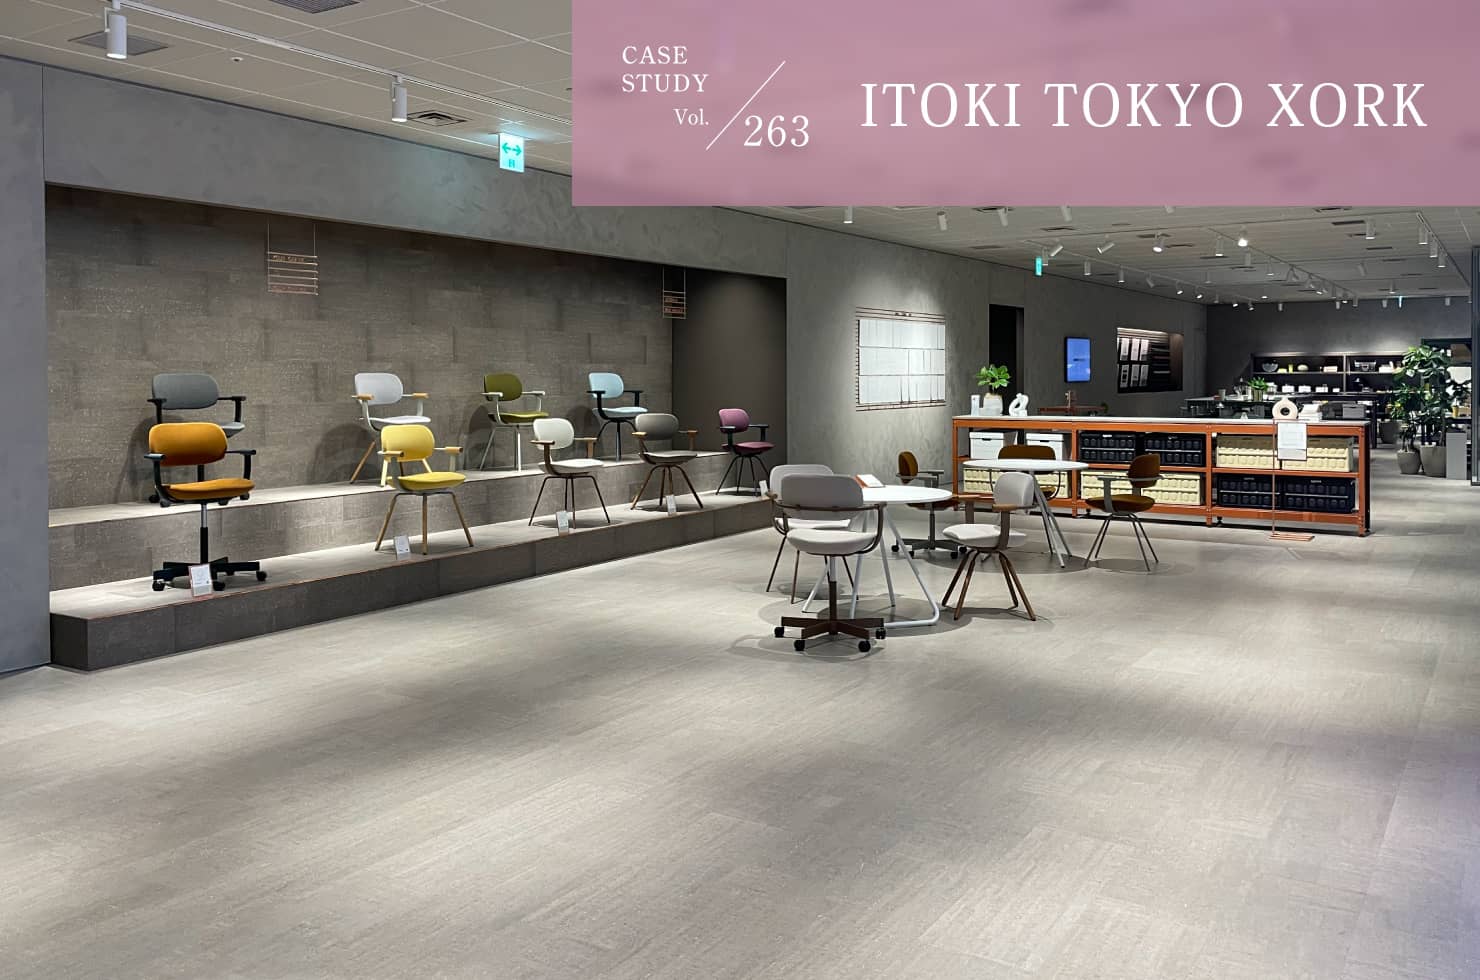 CASE STUDY Vol.263 ITOKI TOKYO XORK